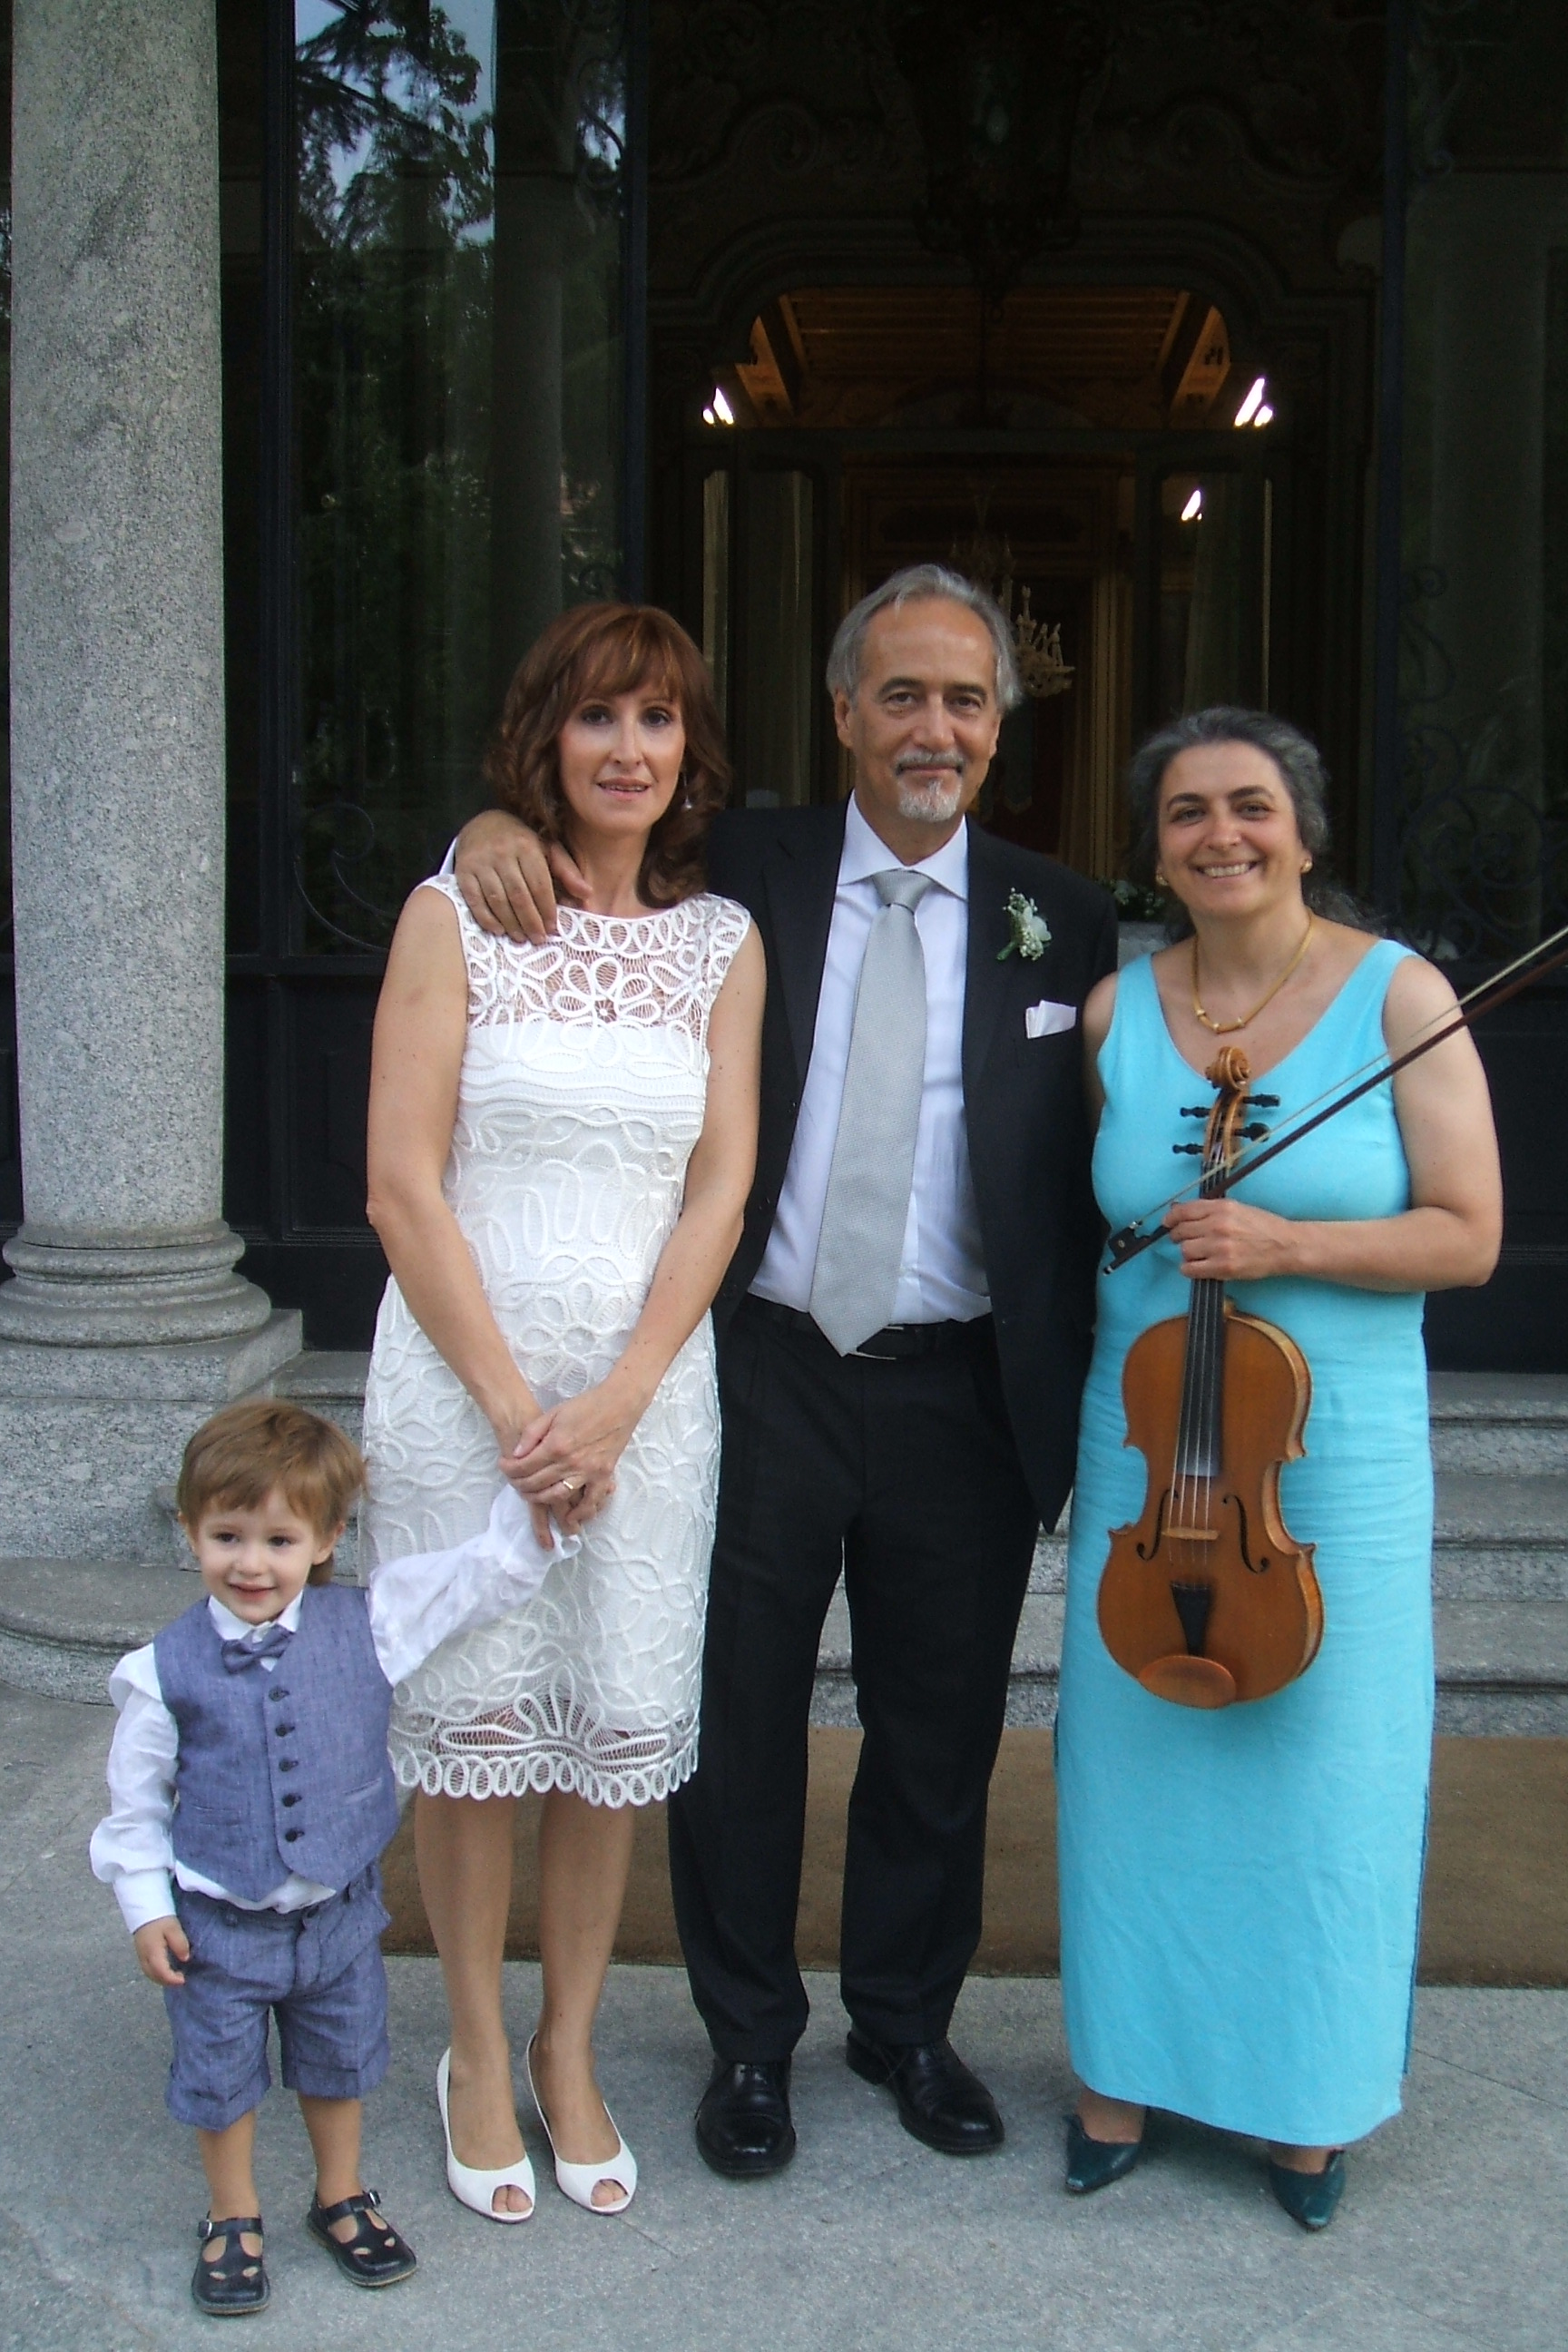 Wedding musician at a civil ceremony. Villa Confalonieri, Merate, Italy